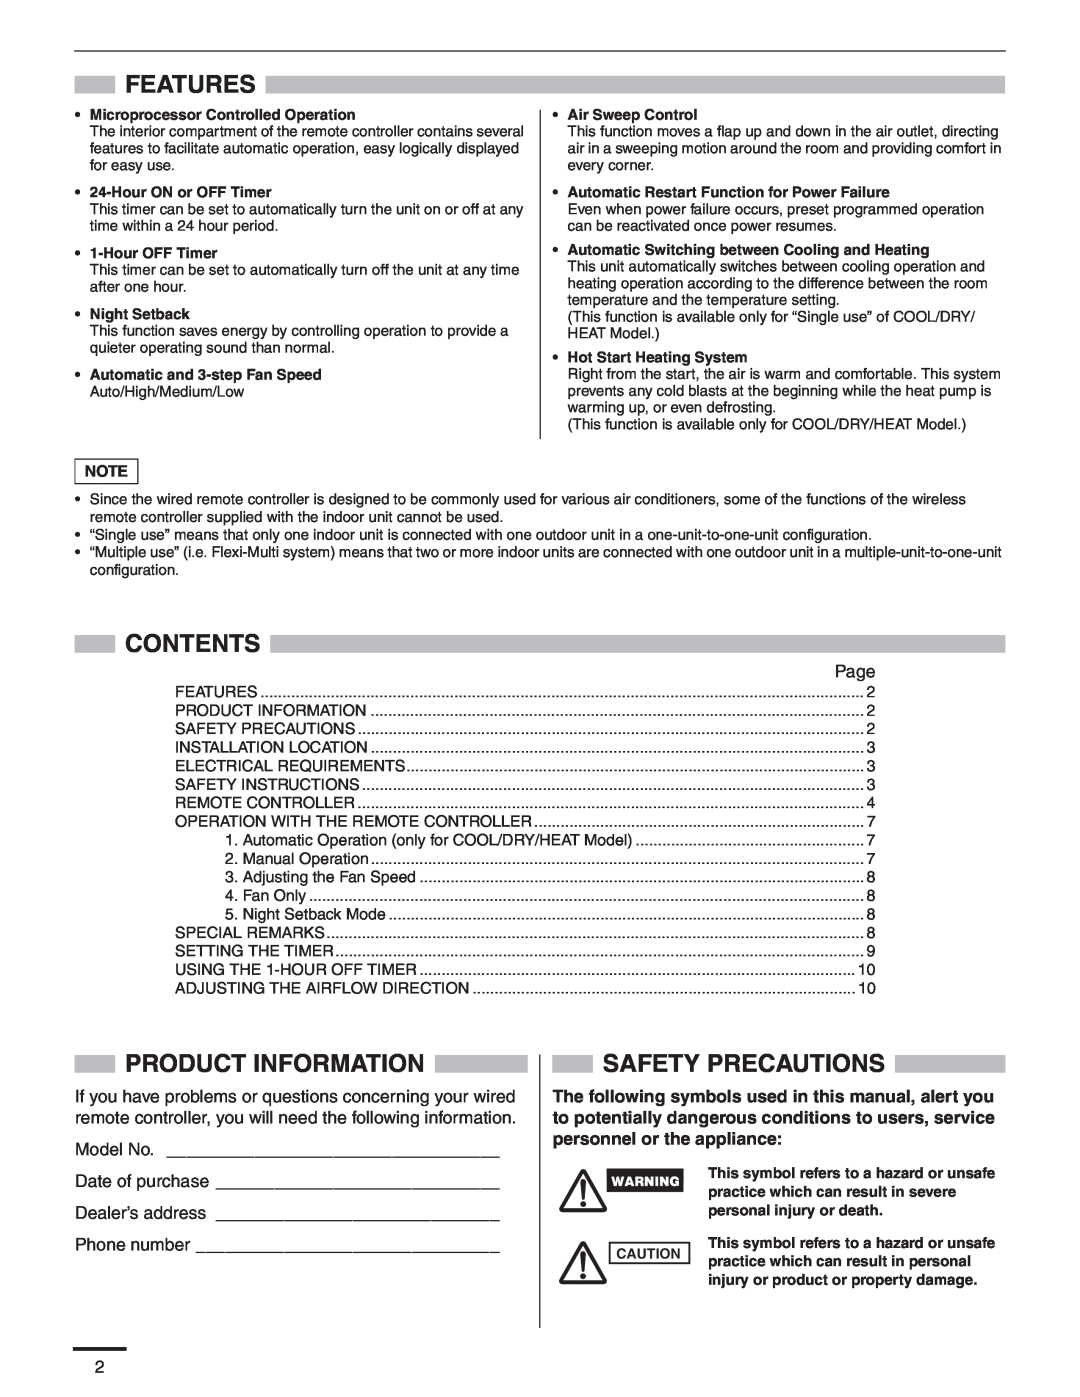 Panasonic CU-KS18NKUA, CU-KS12NK1A service manual Features, Contents, Product Information, Safety Precautions, Page 